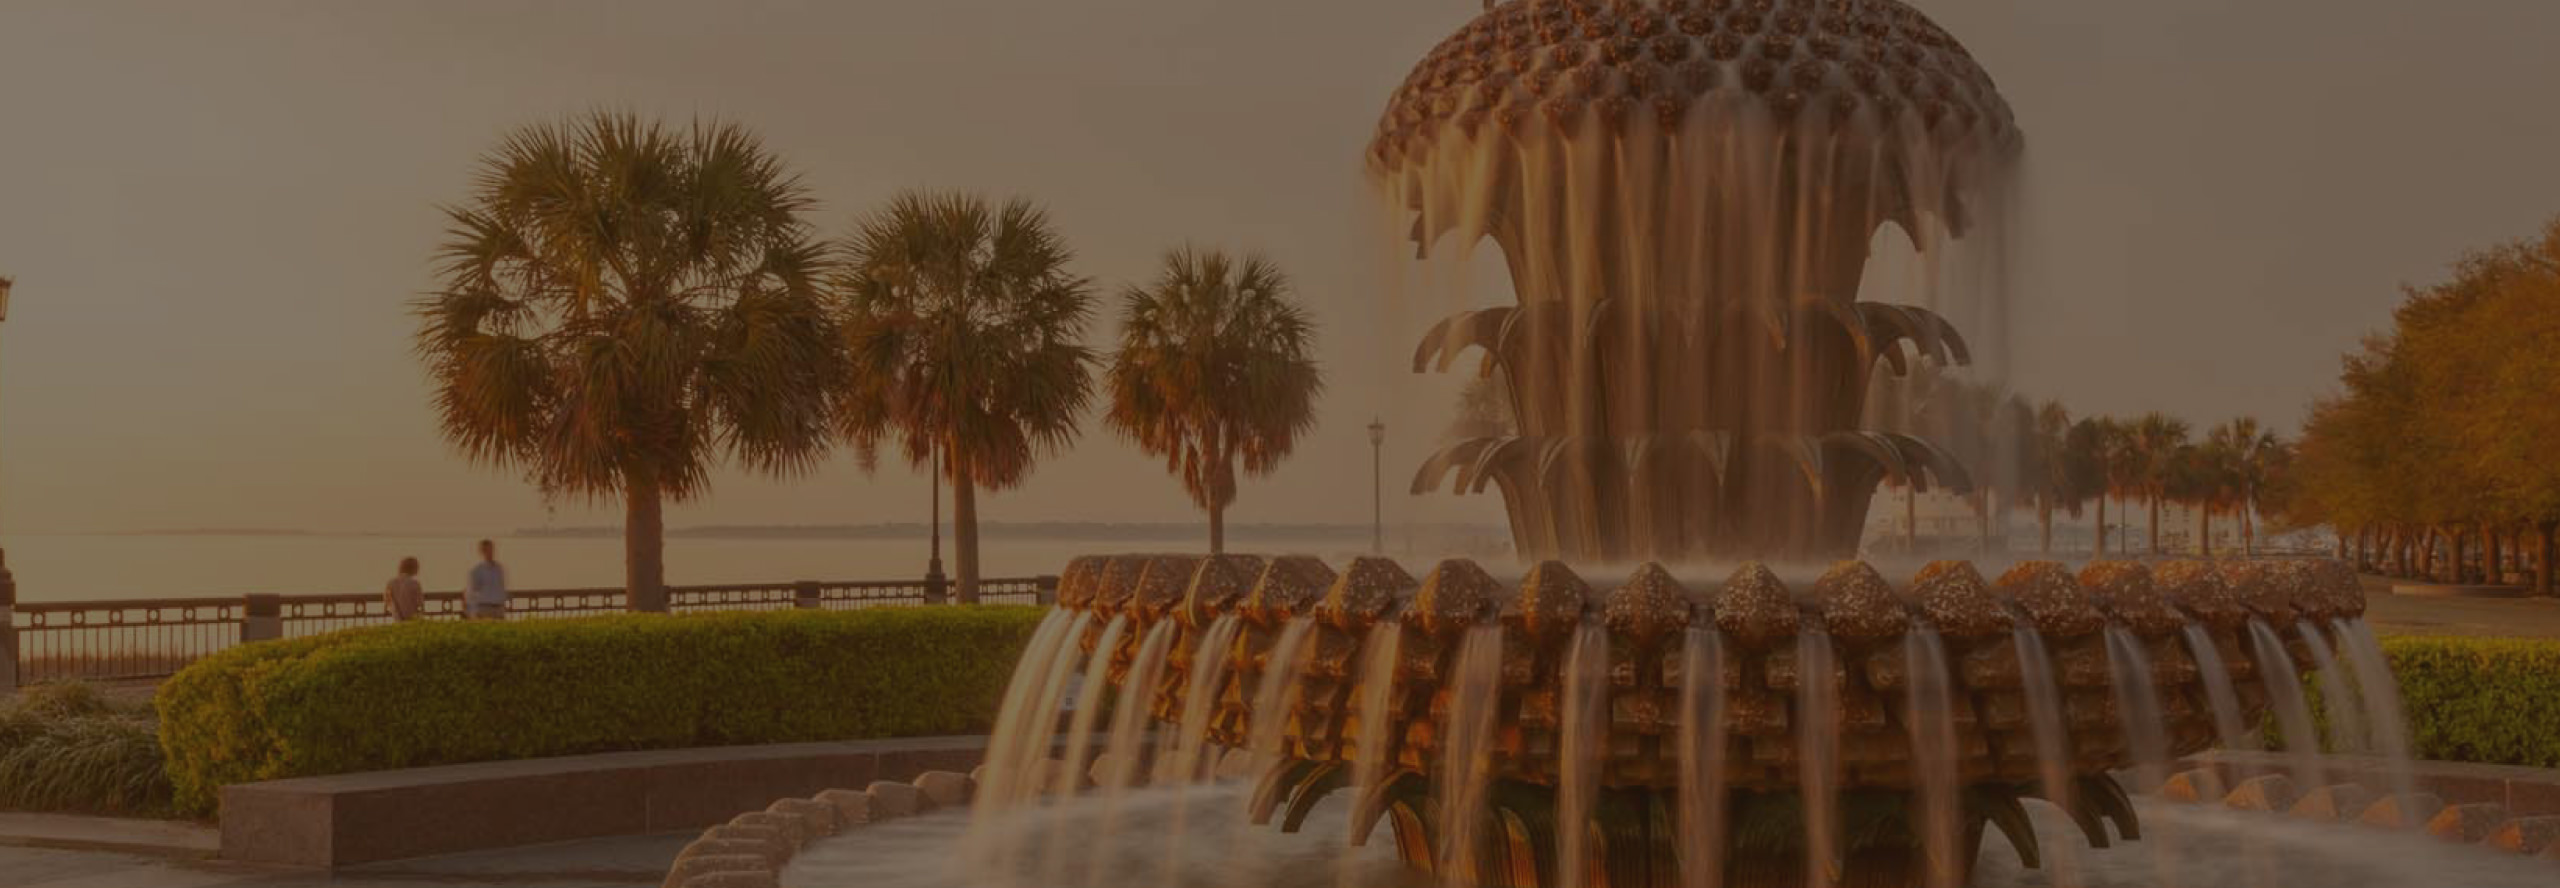 Amazing Charleston Coffee Image of Fountain